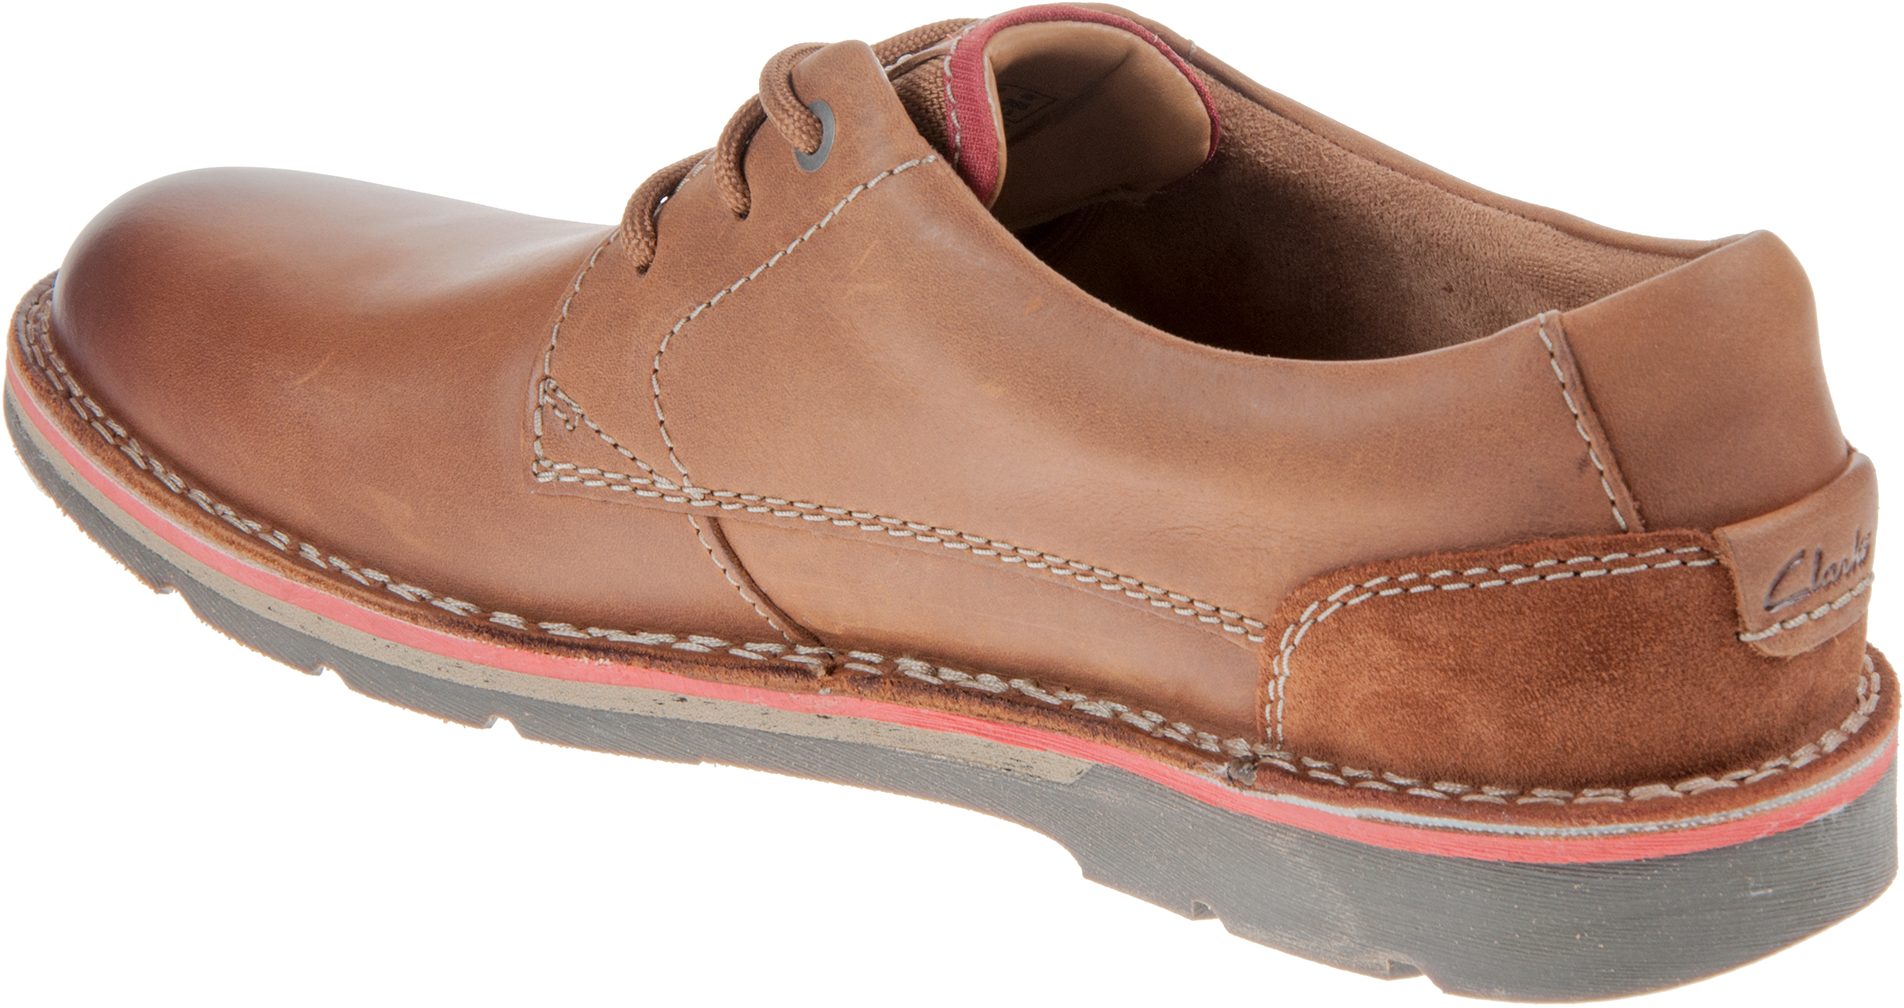 Clarks Edgewick Plain Tan 26119830 - Casual Shoes - Humphries Shoes